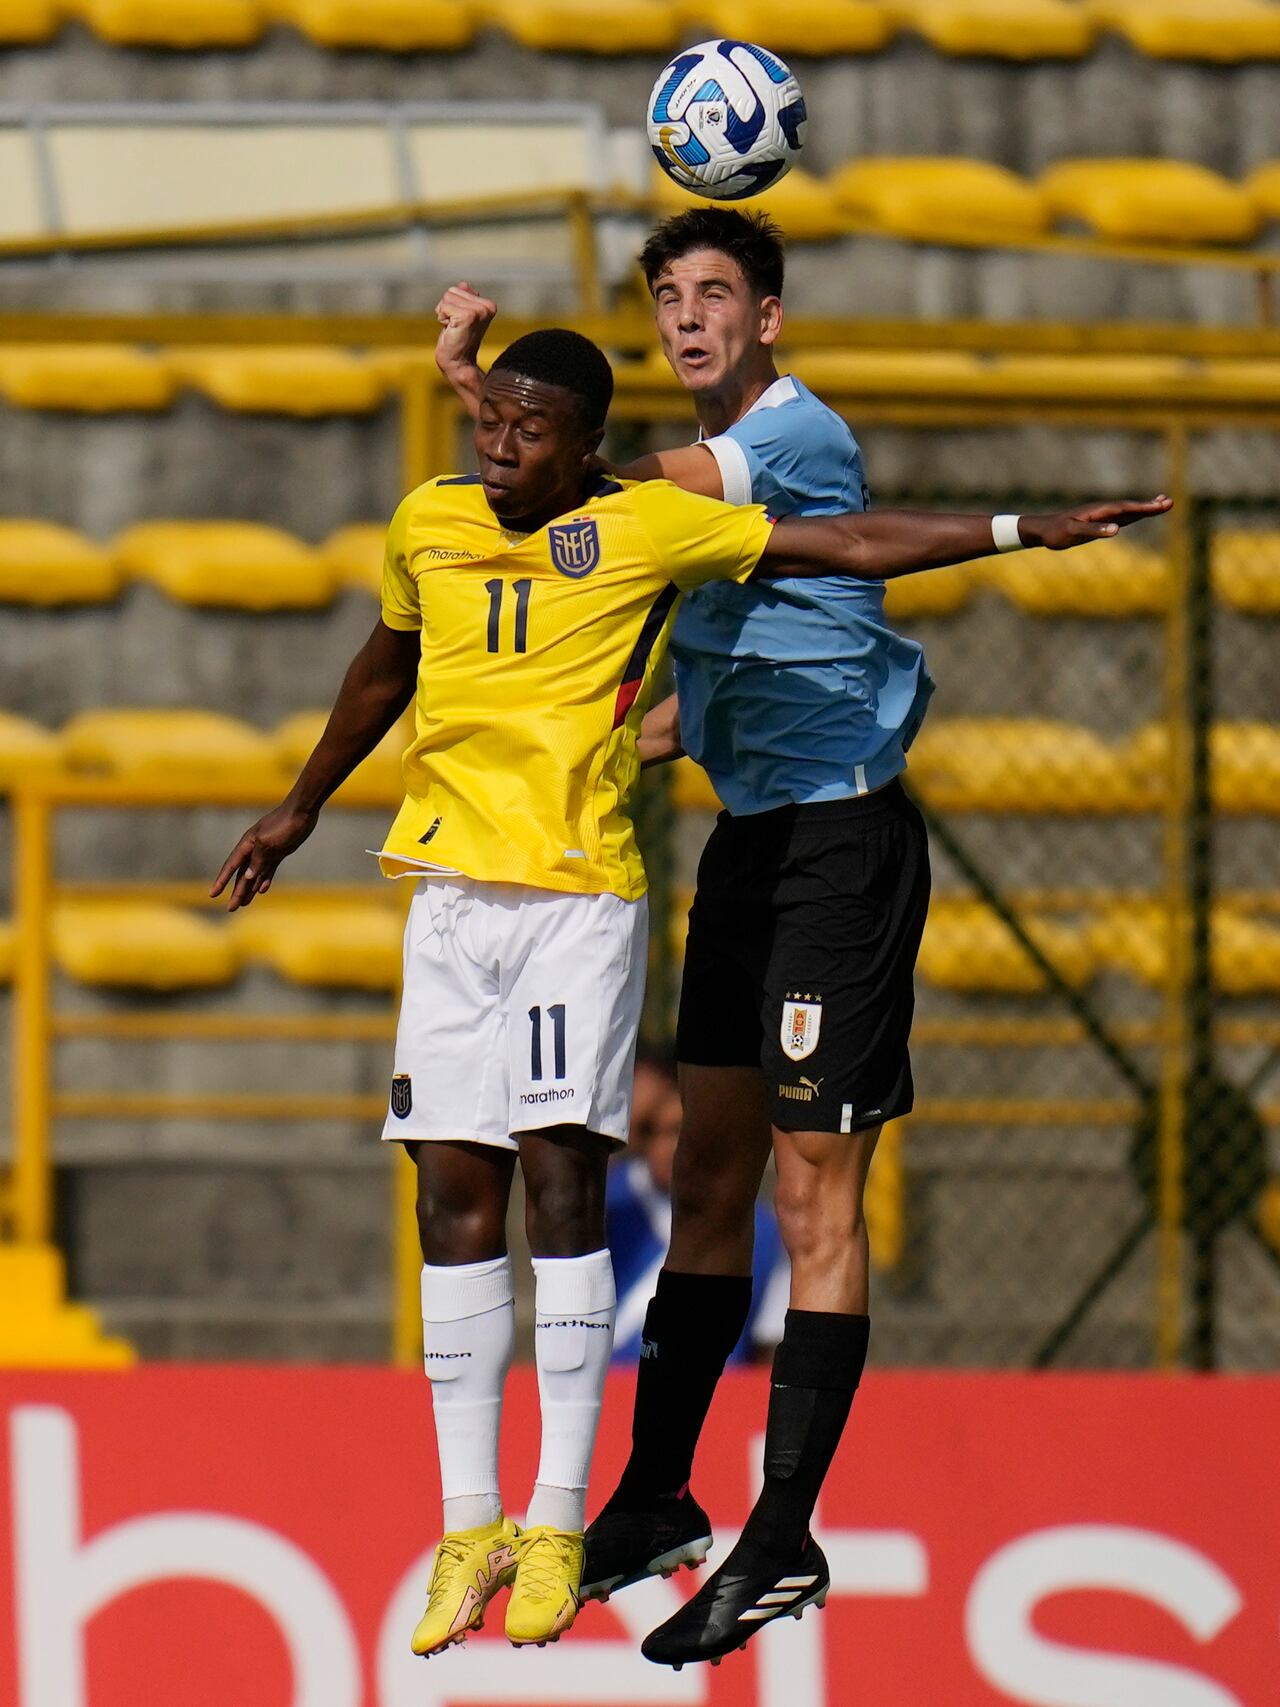 Ecuador's Alan Minda, left, and Uruguay's Facundo Gonzalez go for a header during a South America U-20 soccer match in Bogota, Colombia, Friday, Feb. 3, 2023. (AP Photo/Fernando Vergara)